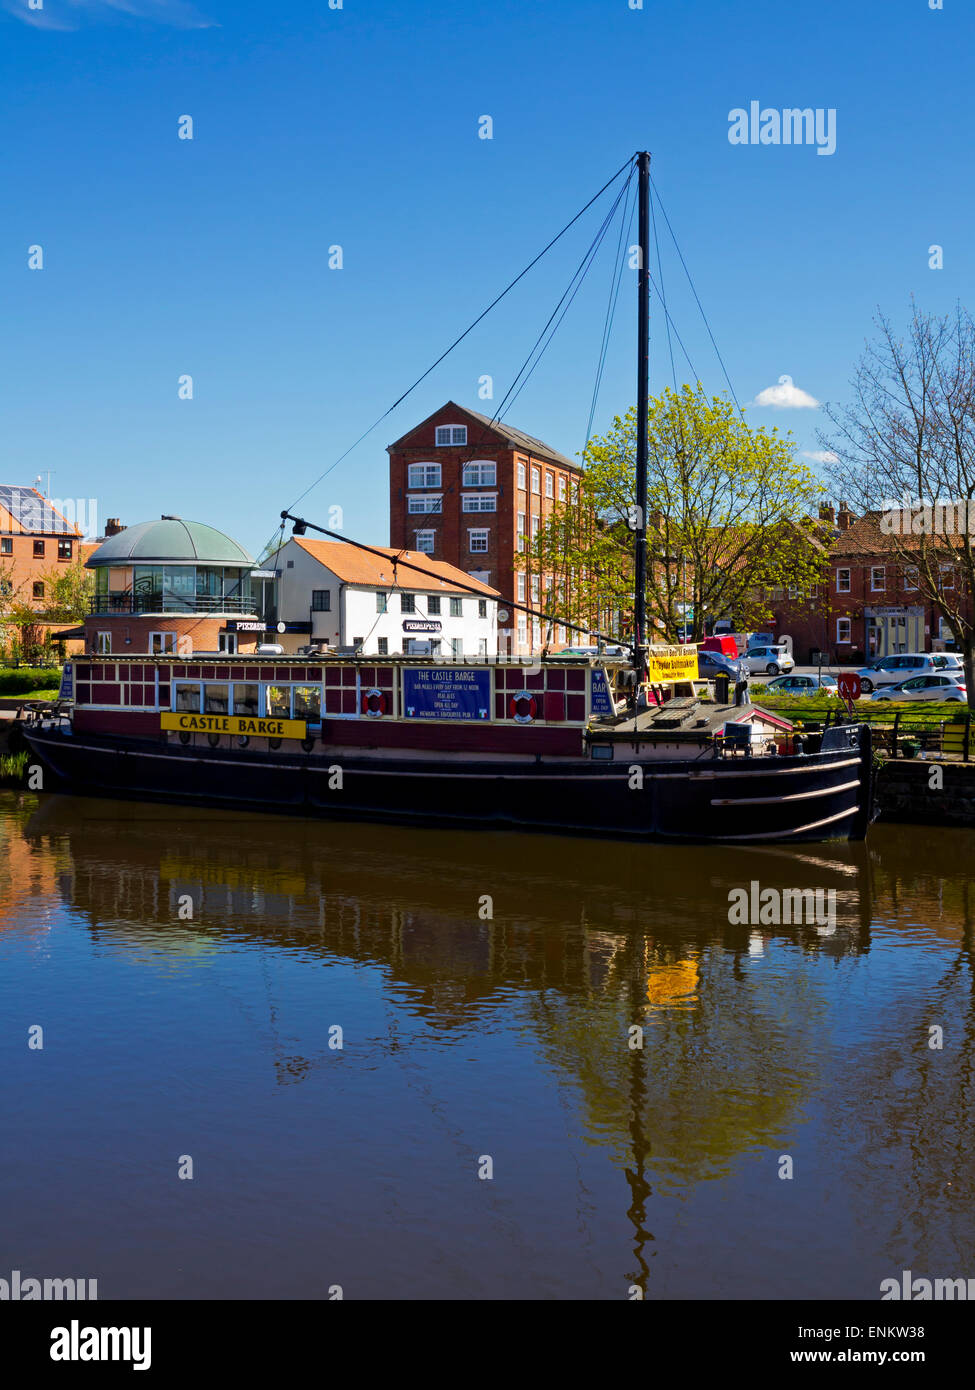 Floating pub The Castle Barge on the River Trent in Newark on Trent Nottinghamshire England UK Stock Photo